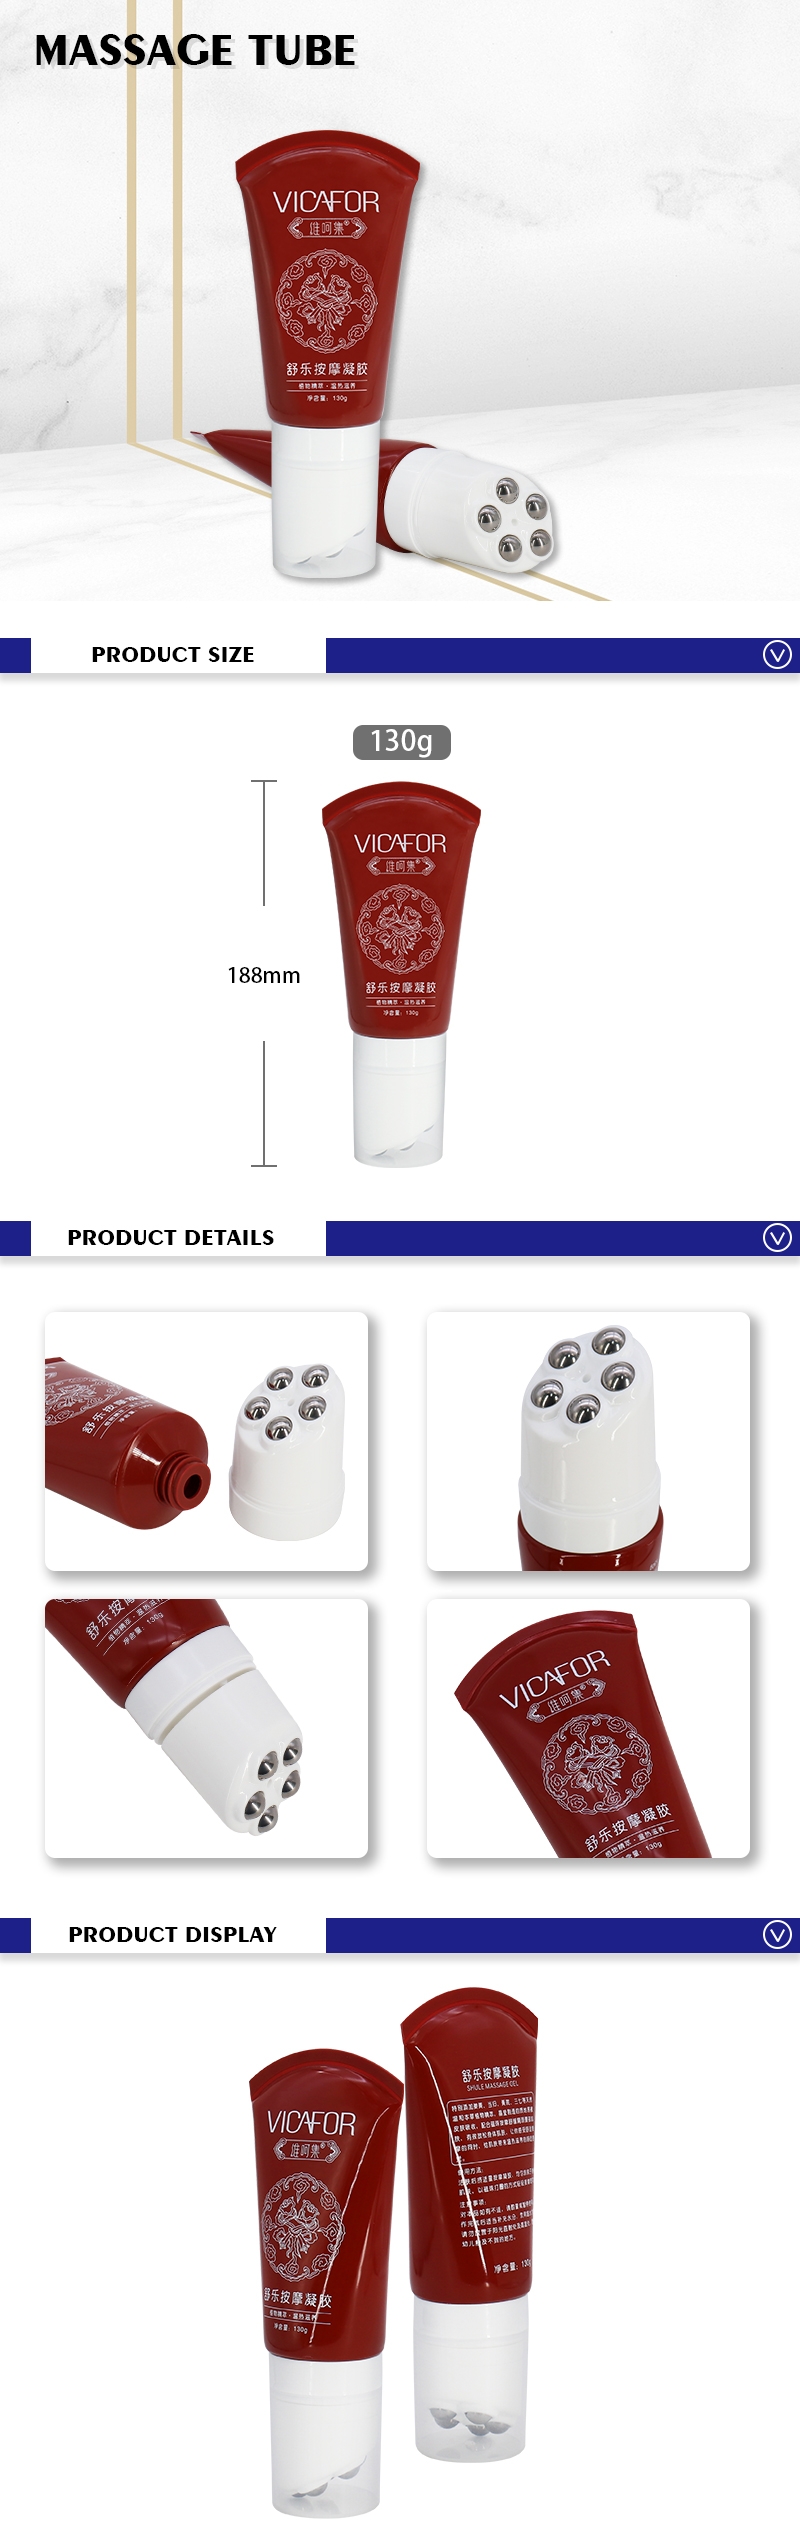 150ml 5oz Body Massage Cream Tube Packaging With Massage Head Applicator